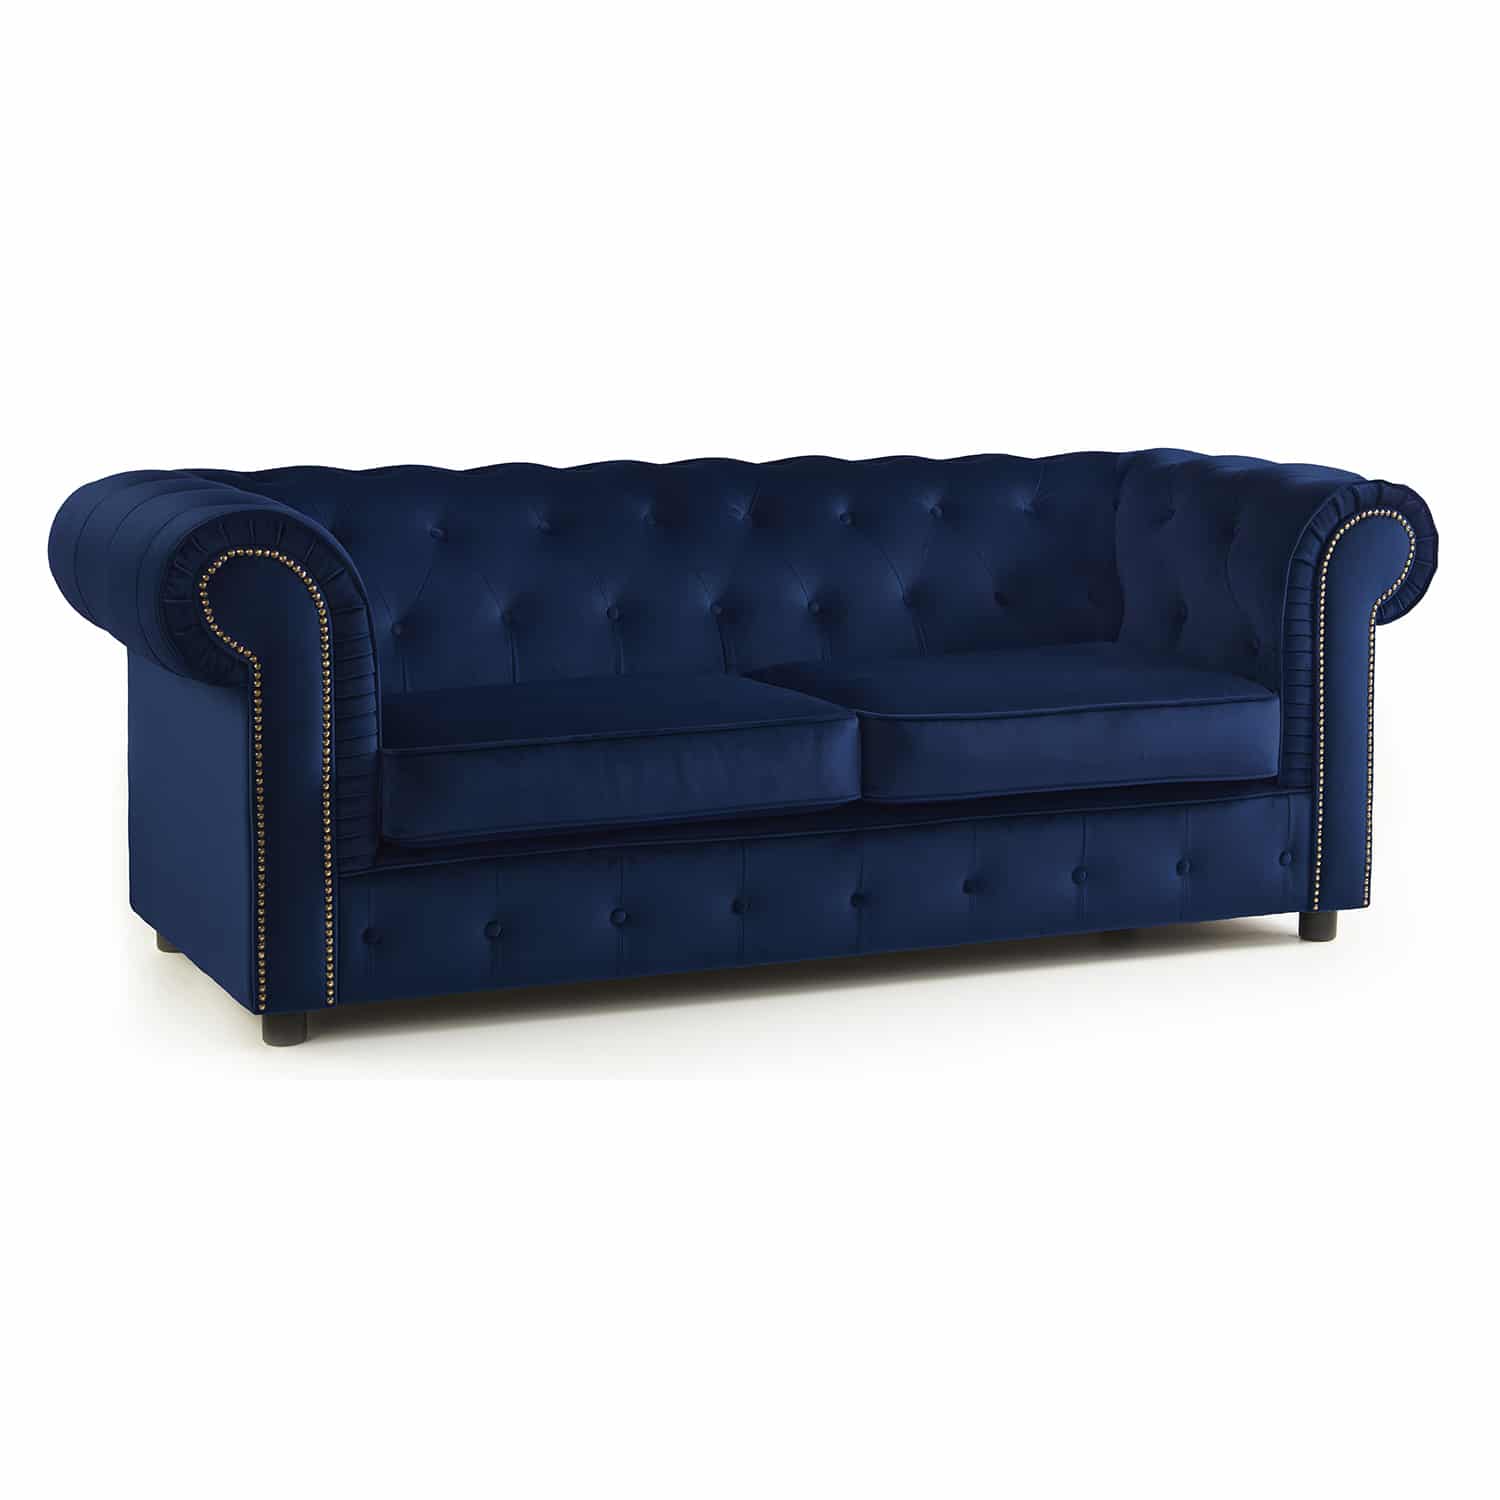 The Ashcroft Soft Velvet Chesterfield 3 Seater Sofa – Indigo